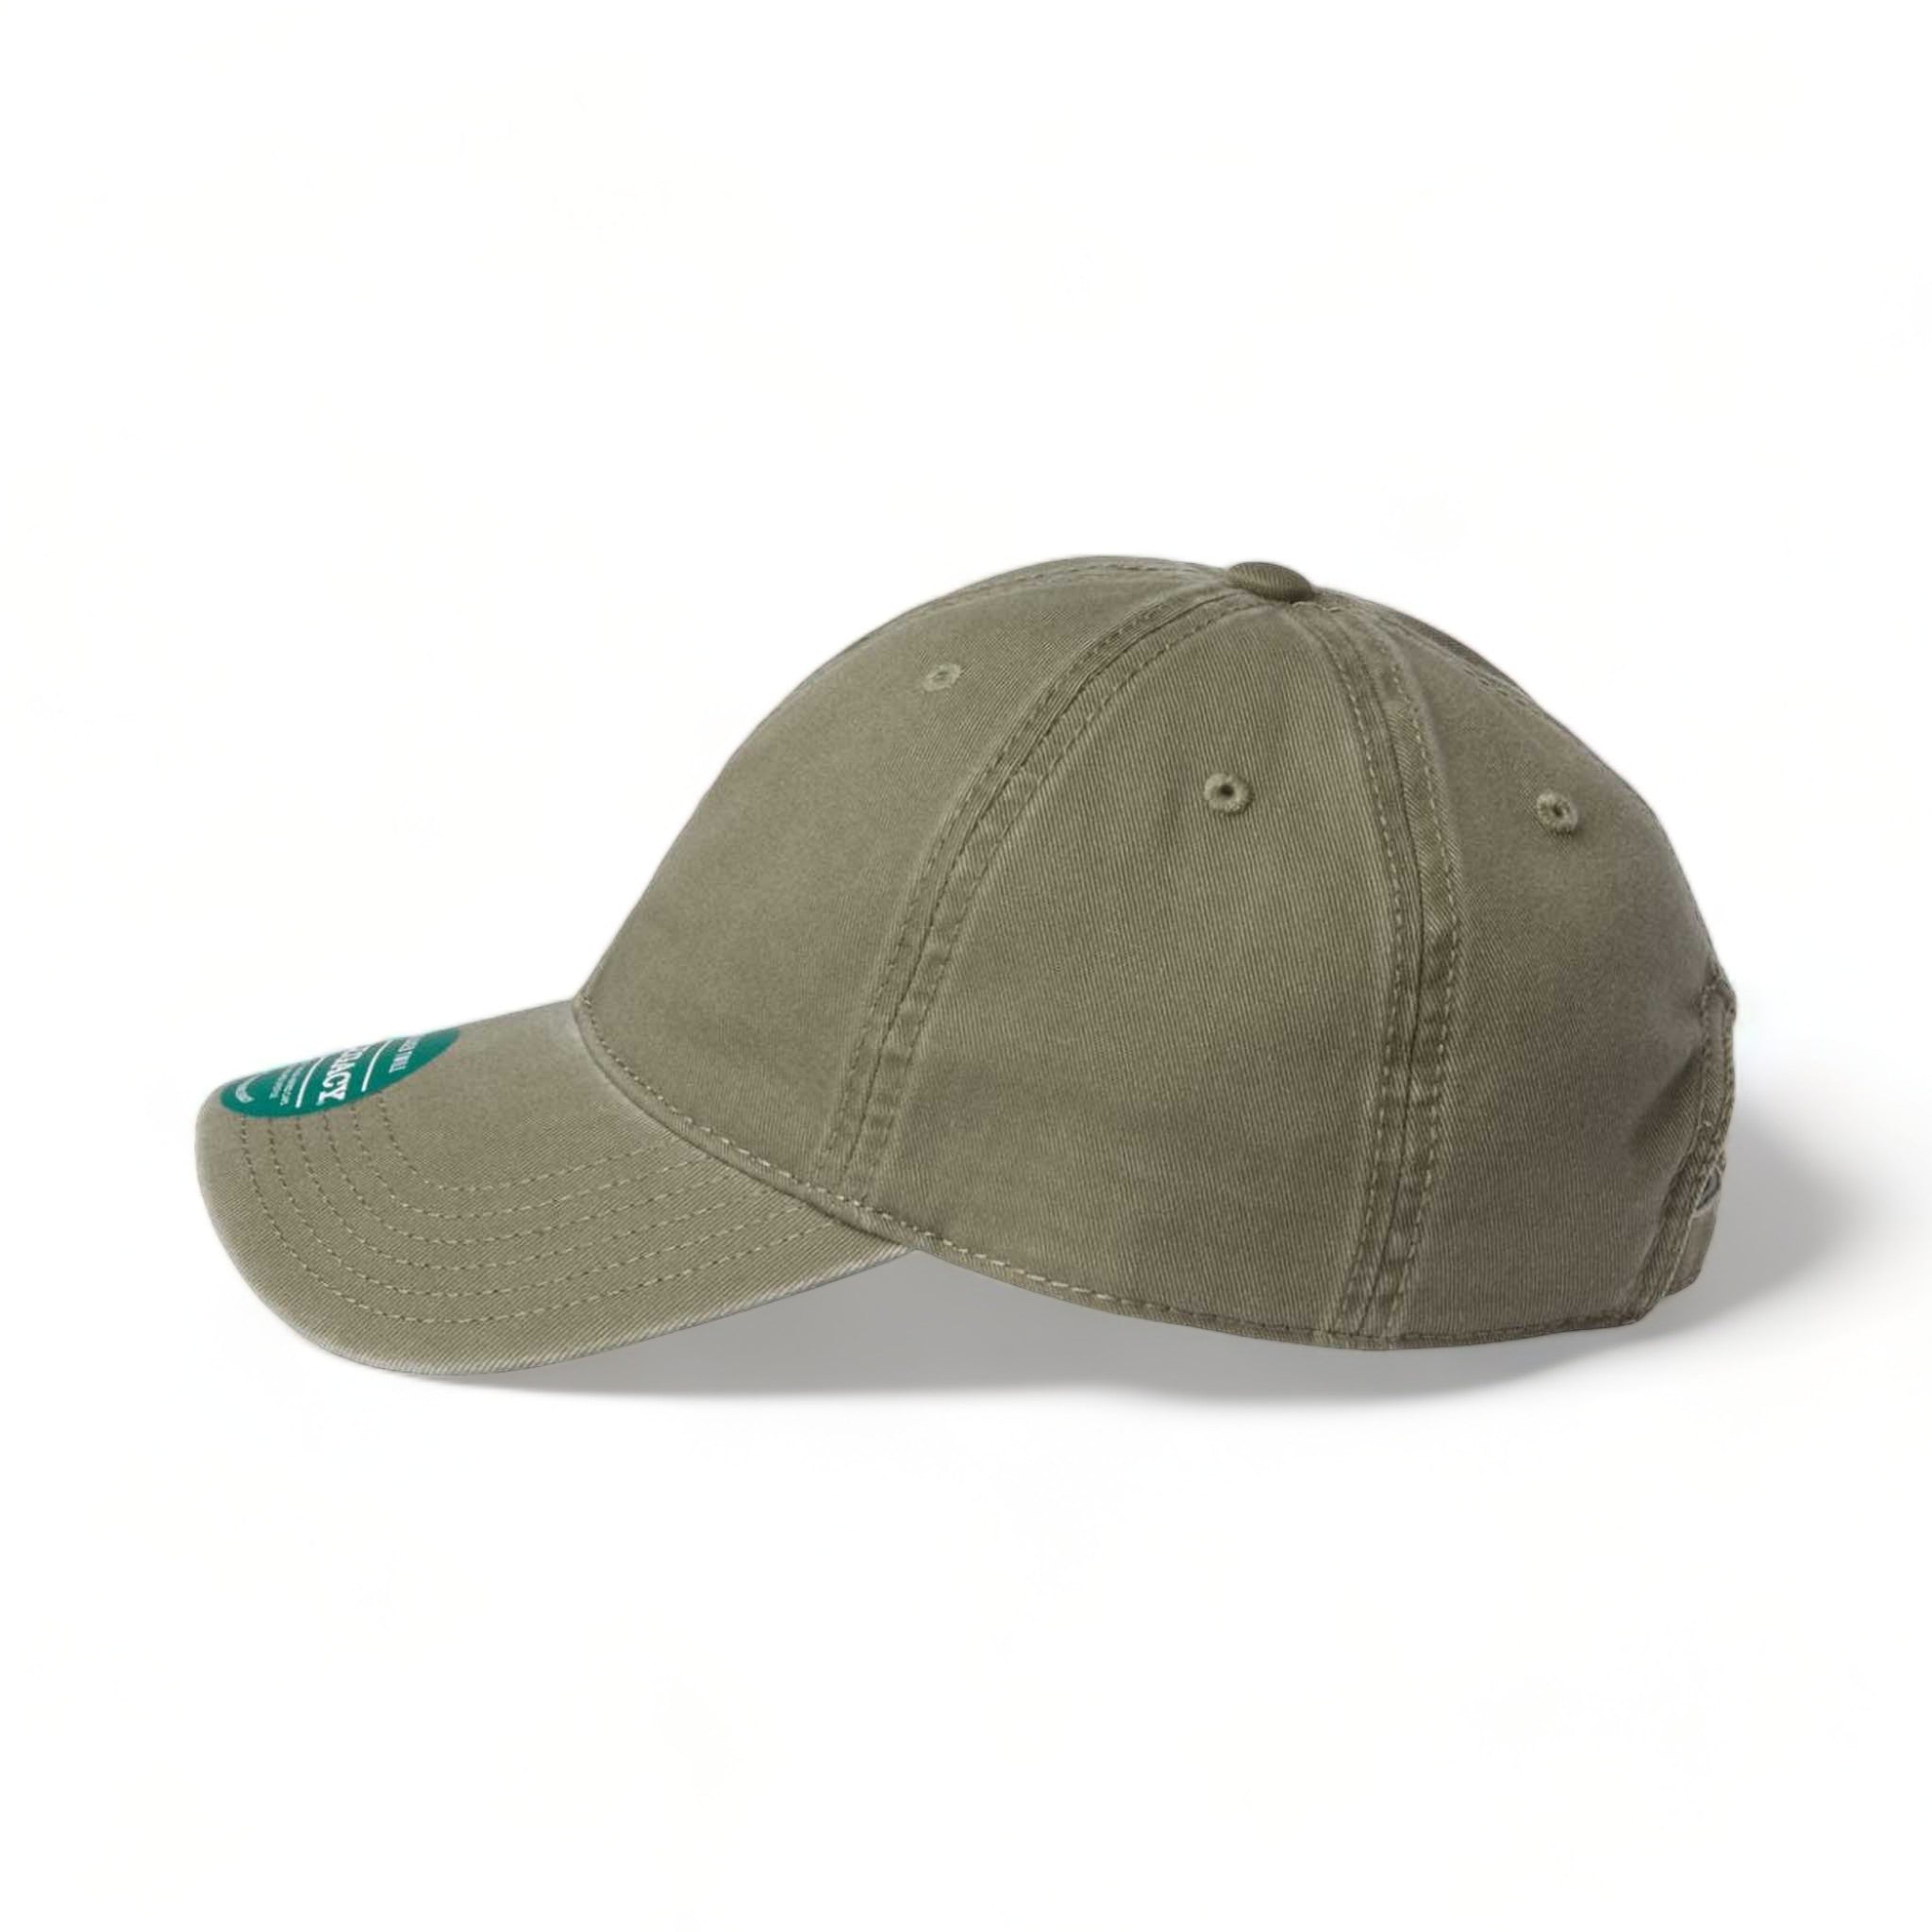 Side view of LEGACY EZA custom hat in moss green